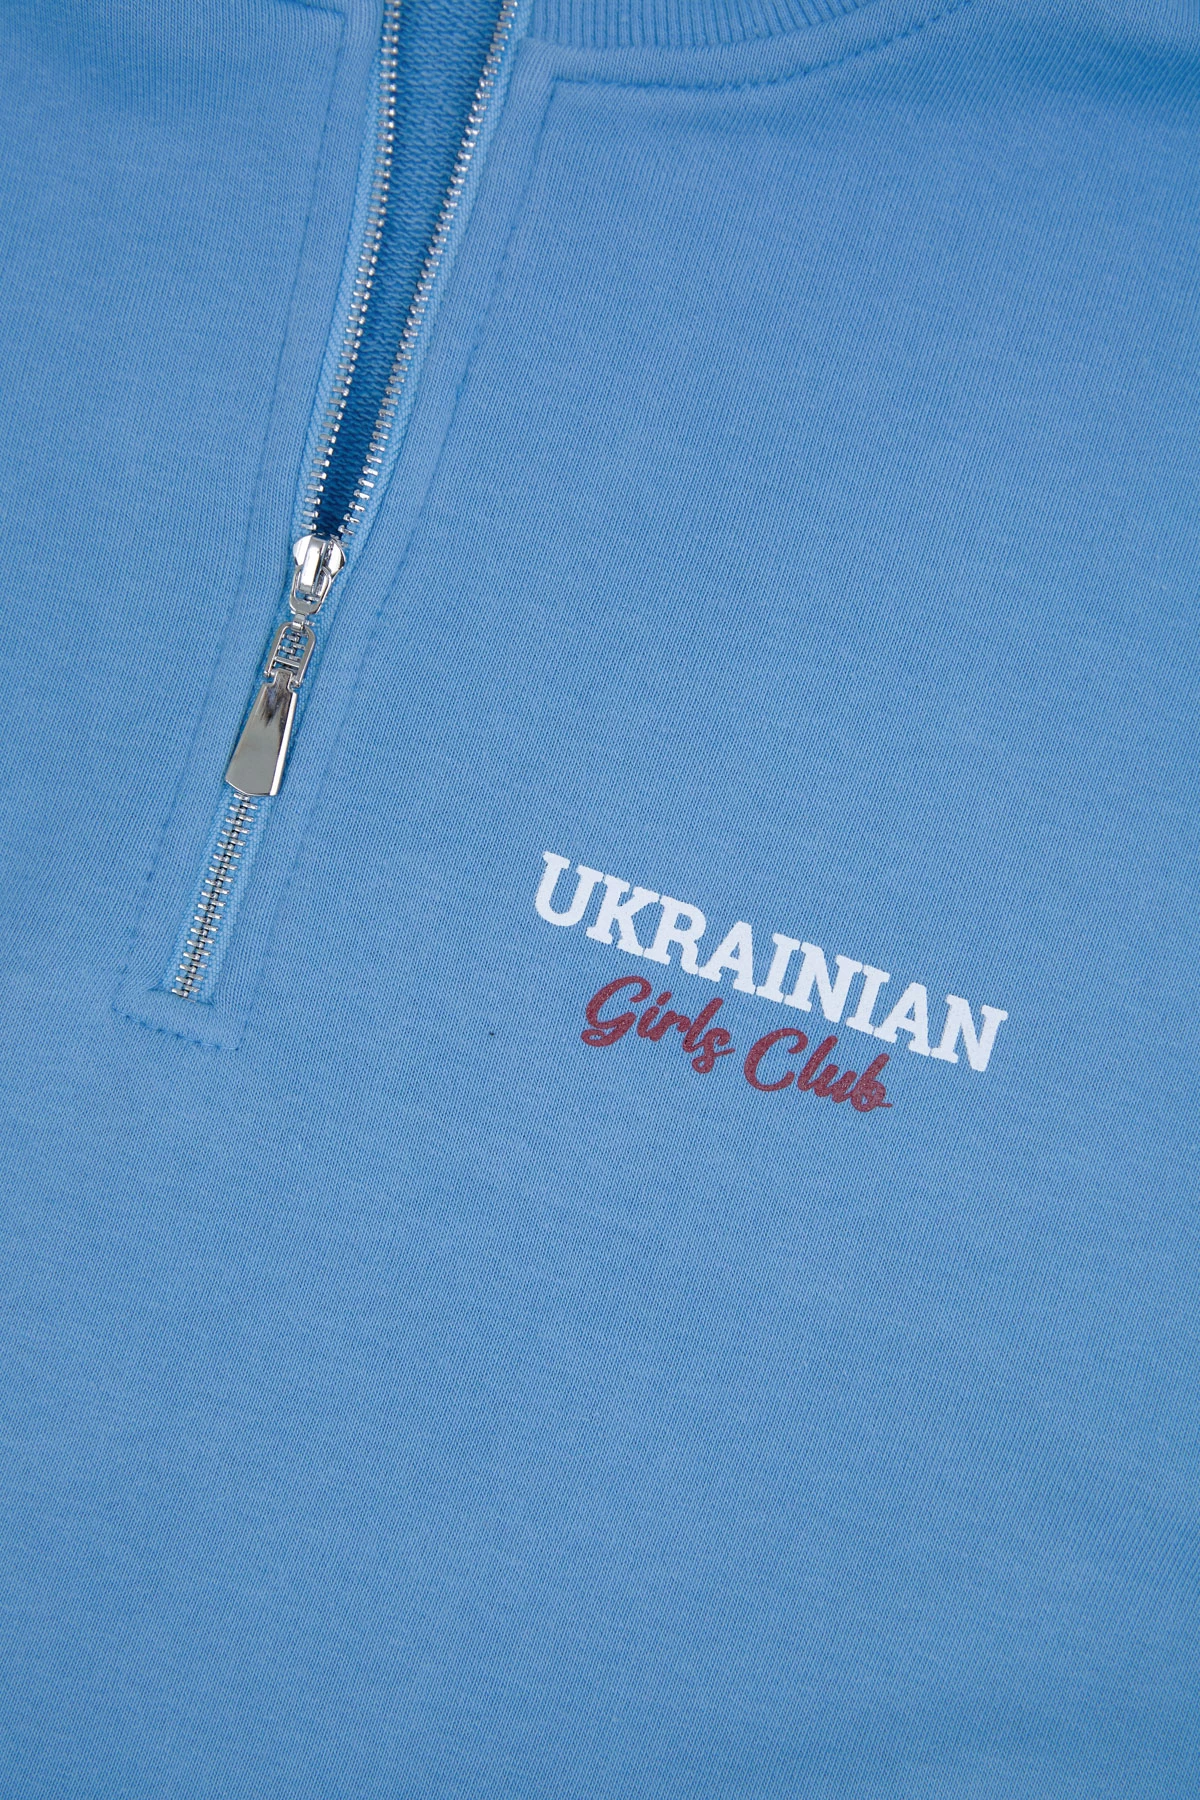 Blue knit sweatshirt "Ukrainian girls club", photo 5